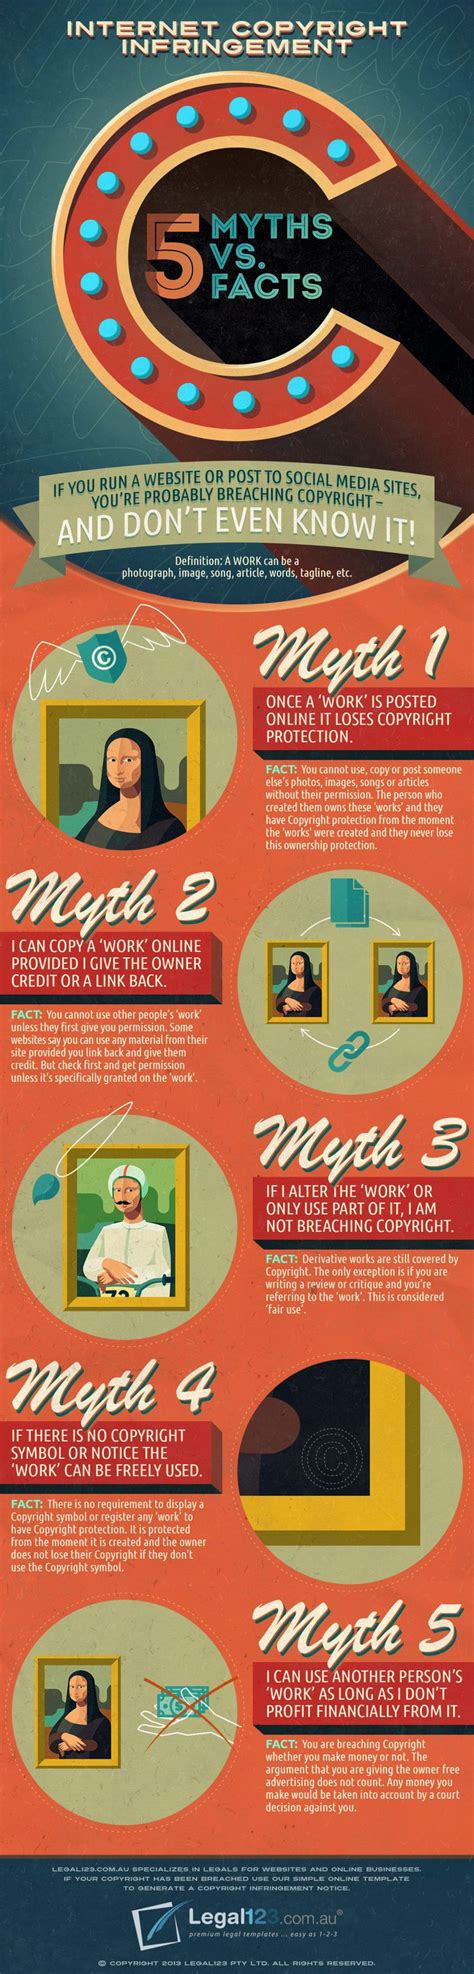 educational infographic copyright infringement 5 myths